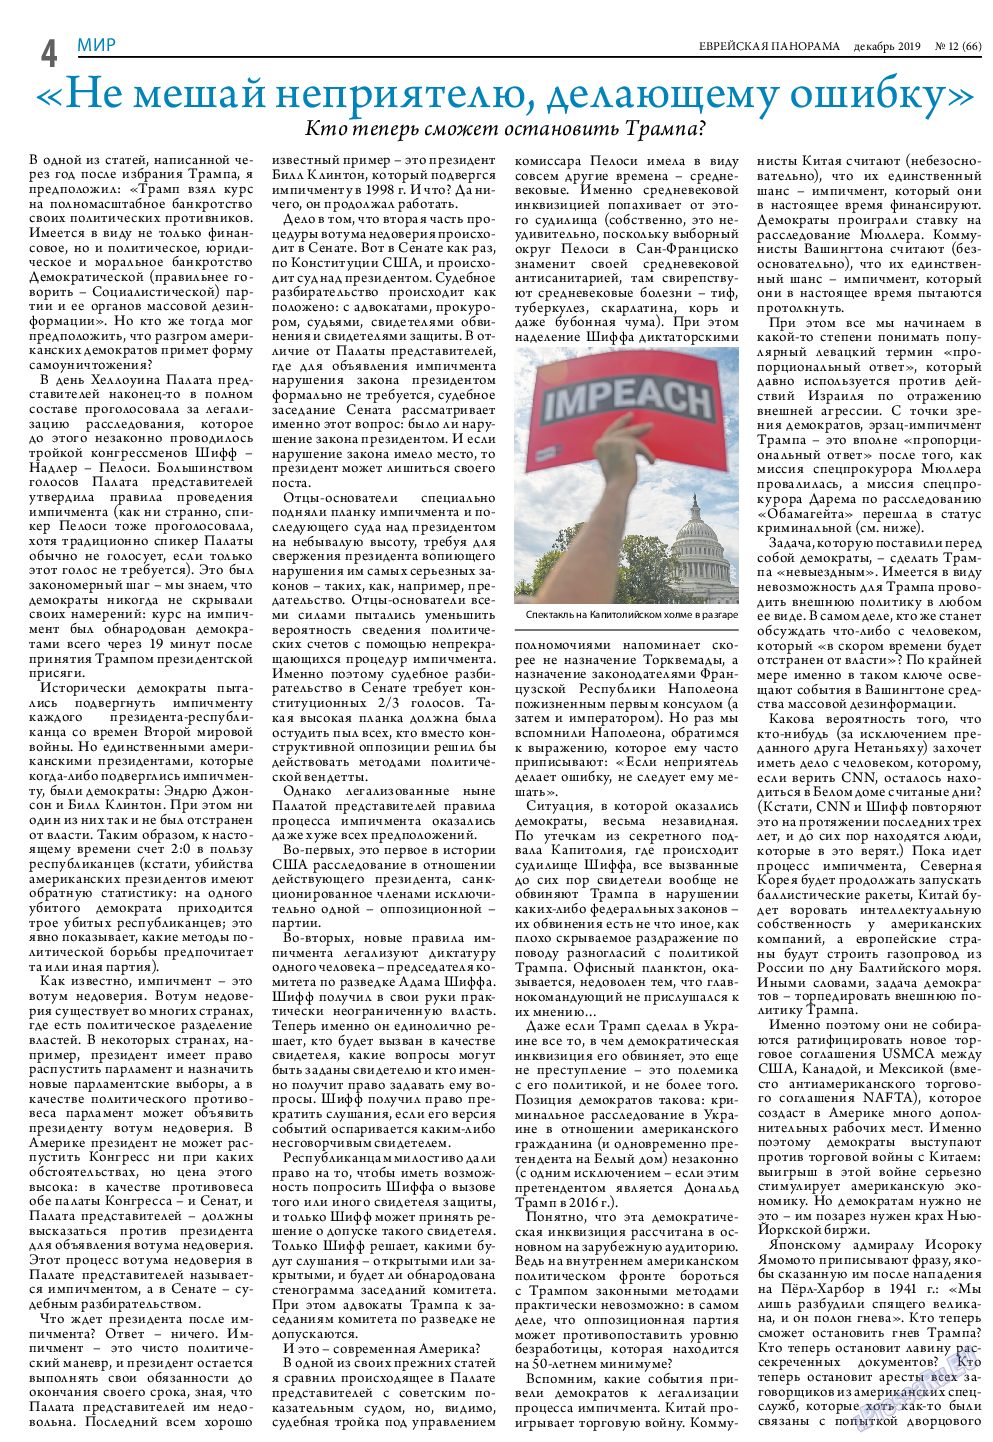 Еврейская панорама, газета. 2019 №12 стр.4